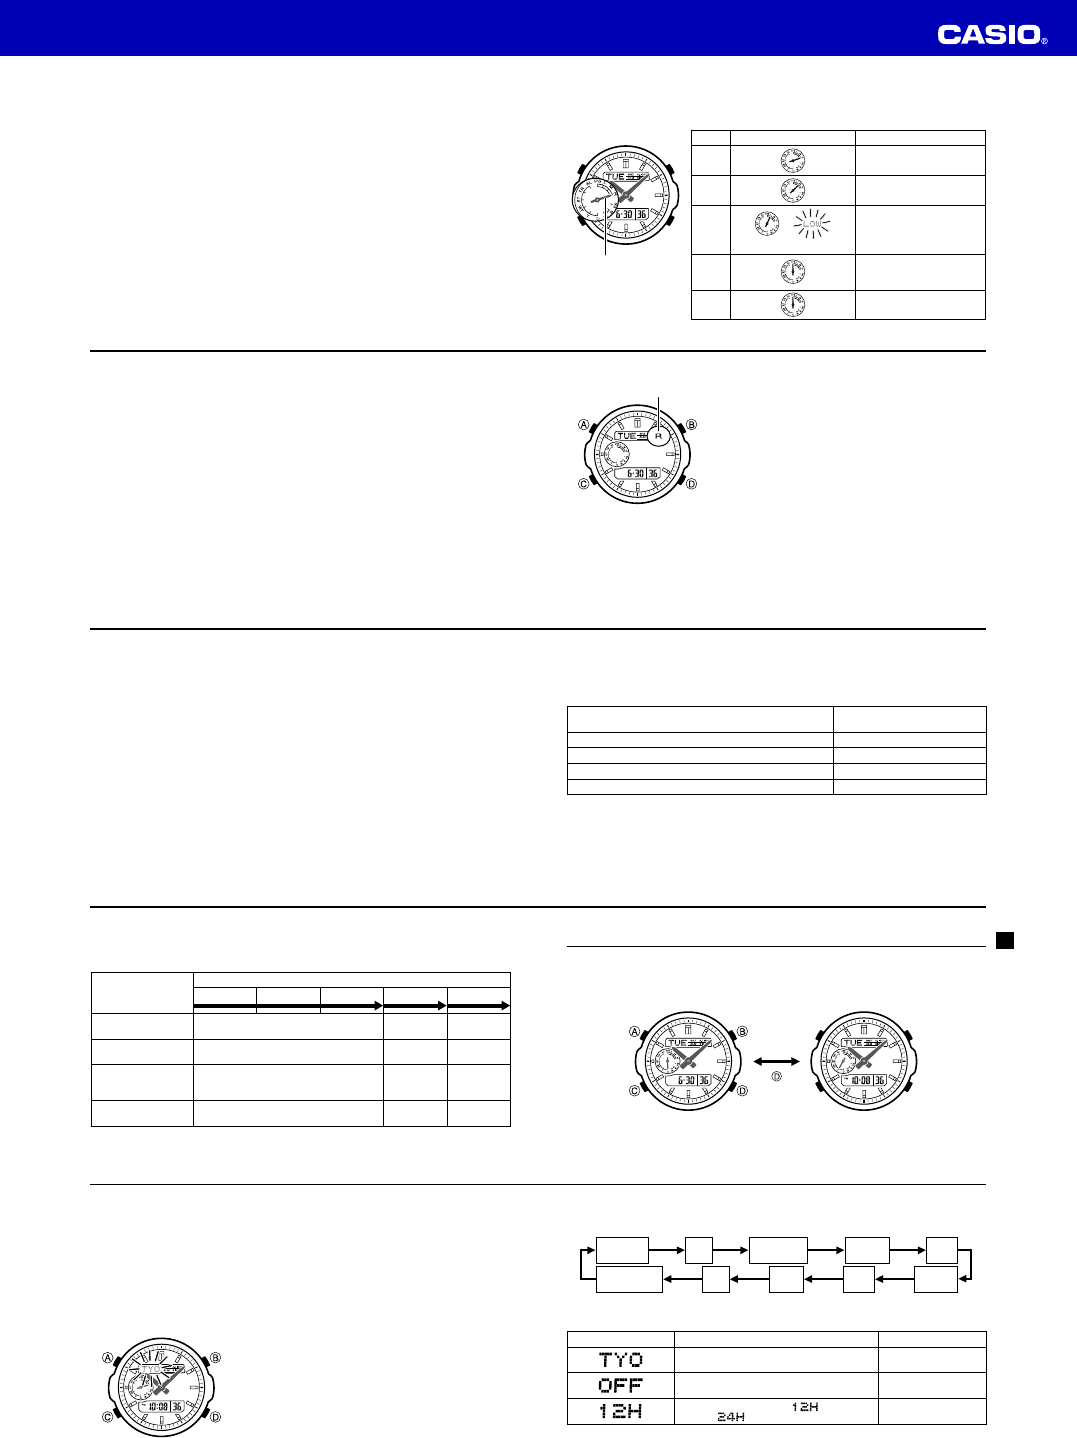 Manual Casio 5110 (page 6 of 9) (English)